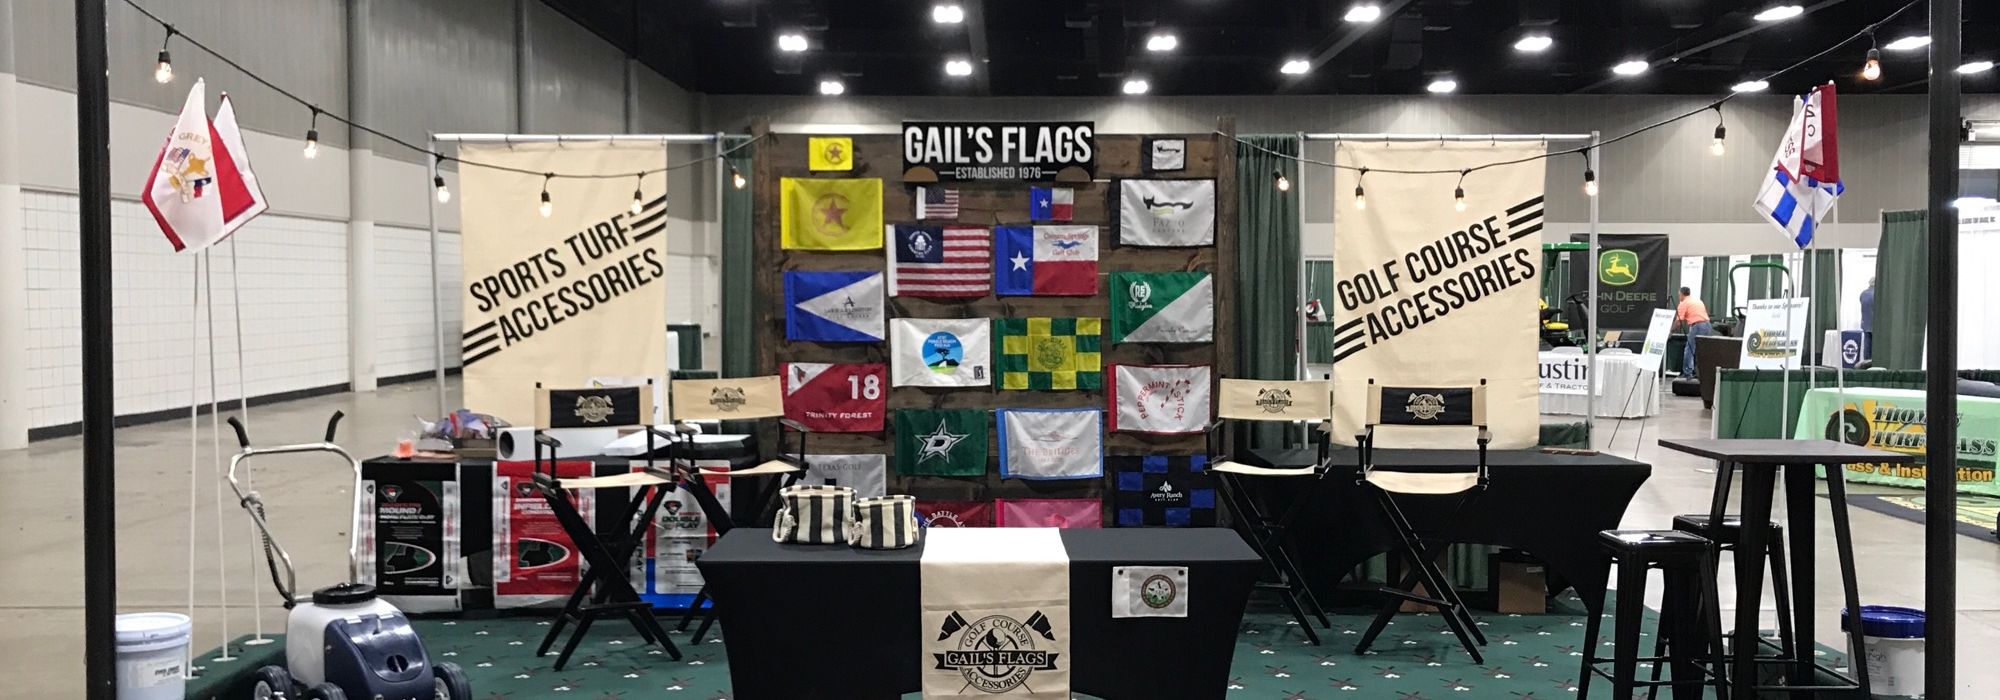 Gails Flags Banner